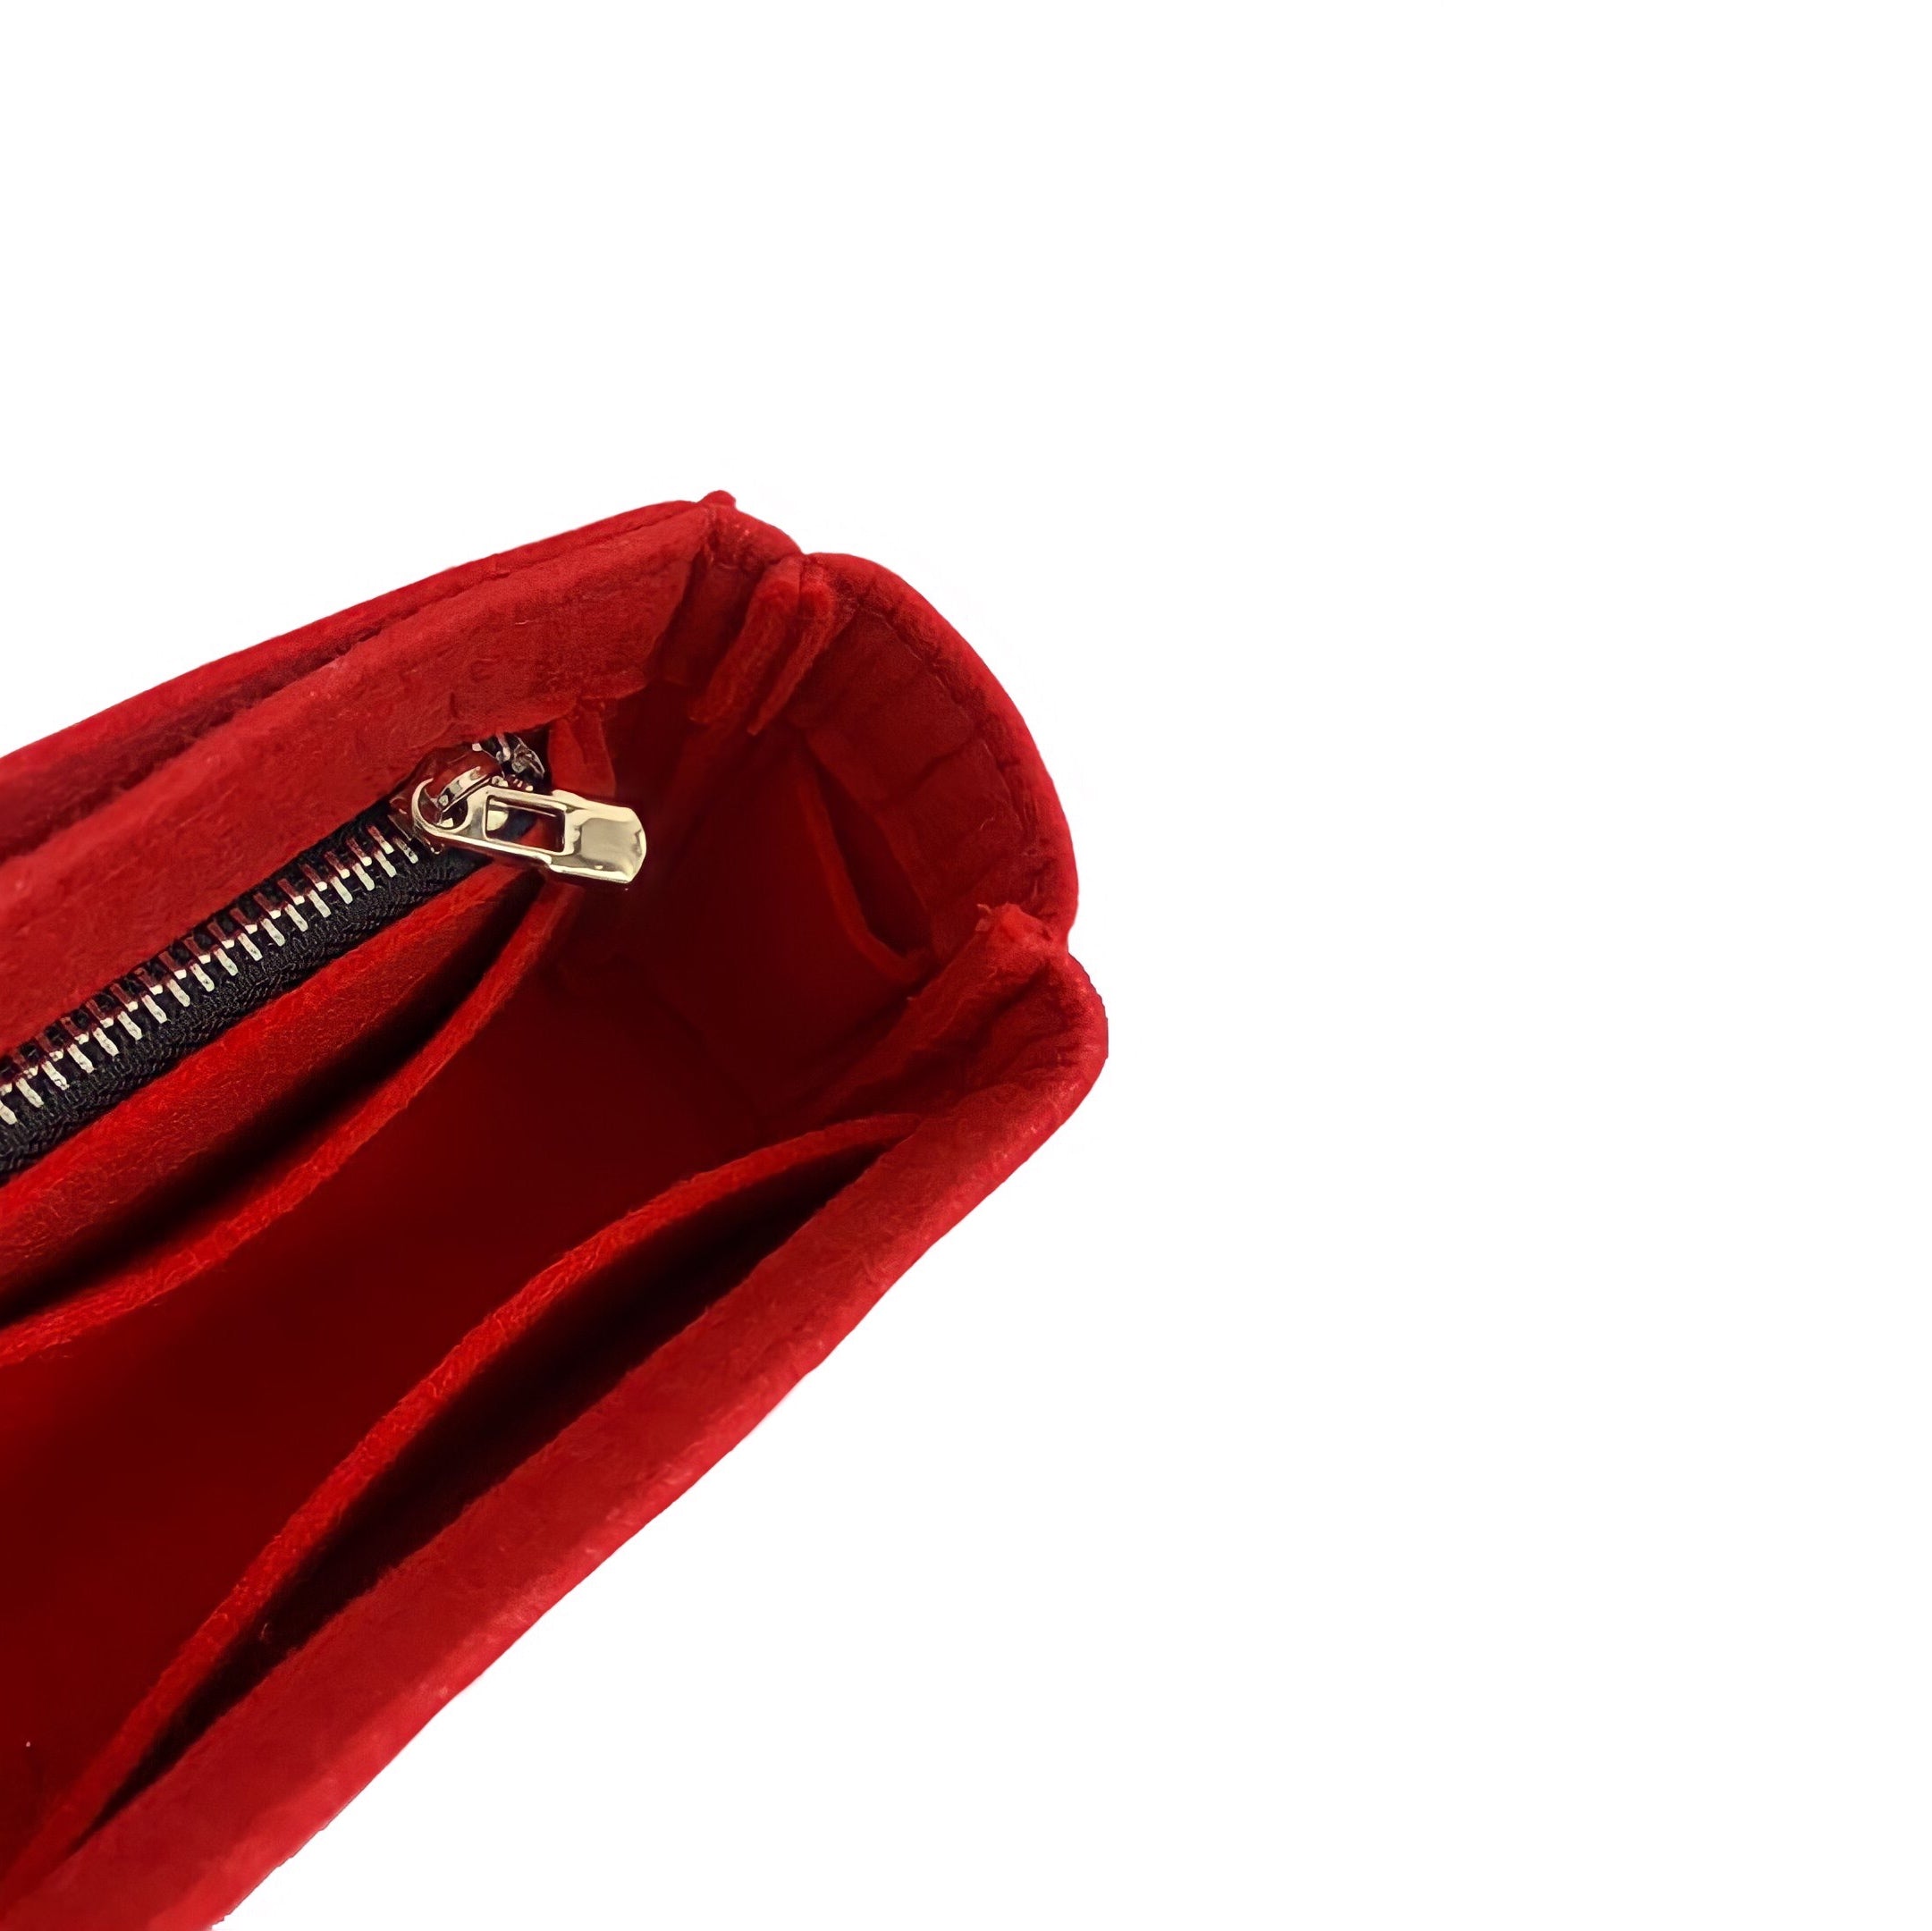 BaginBag |  Handbag Organizer For Chanel Gabrielle Hobo Bag | Chanel Purse Insert | Bag Liner | Chanel Insert Organizer | Chanel Organizer | Chanel Inner Bag | Luxury bag | Chanel Bag protector | Chanel bag Insert